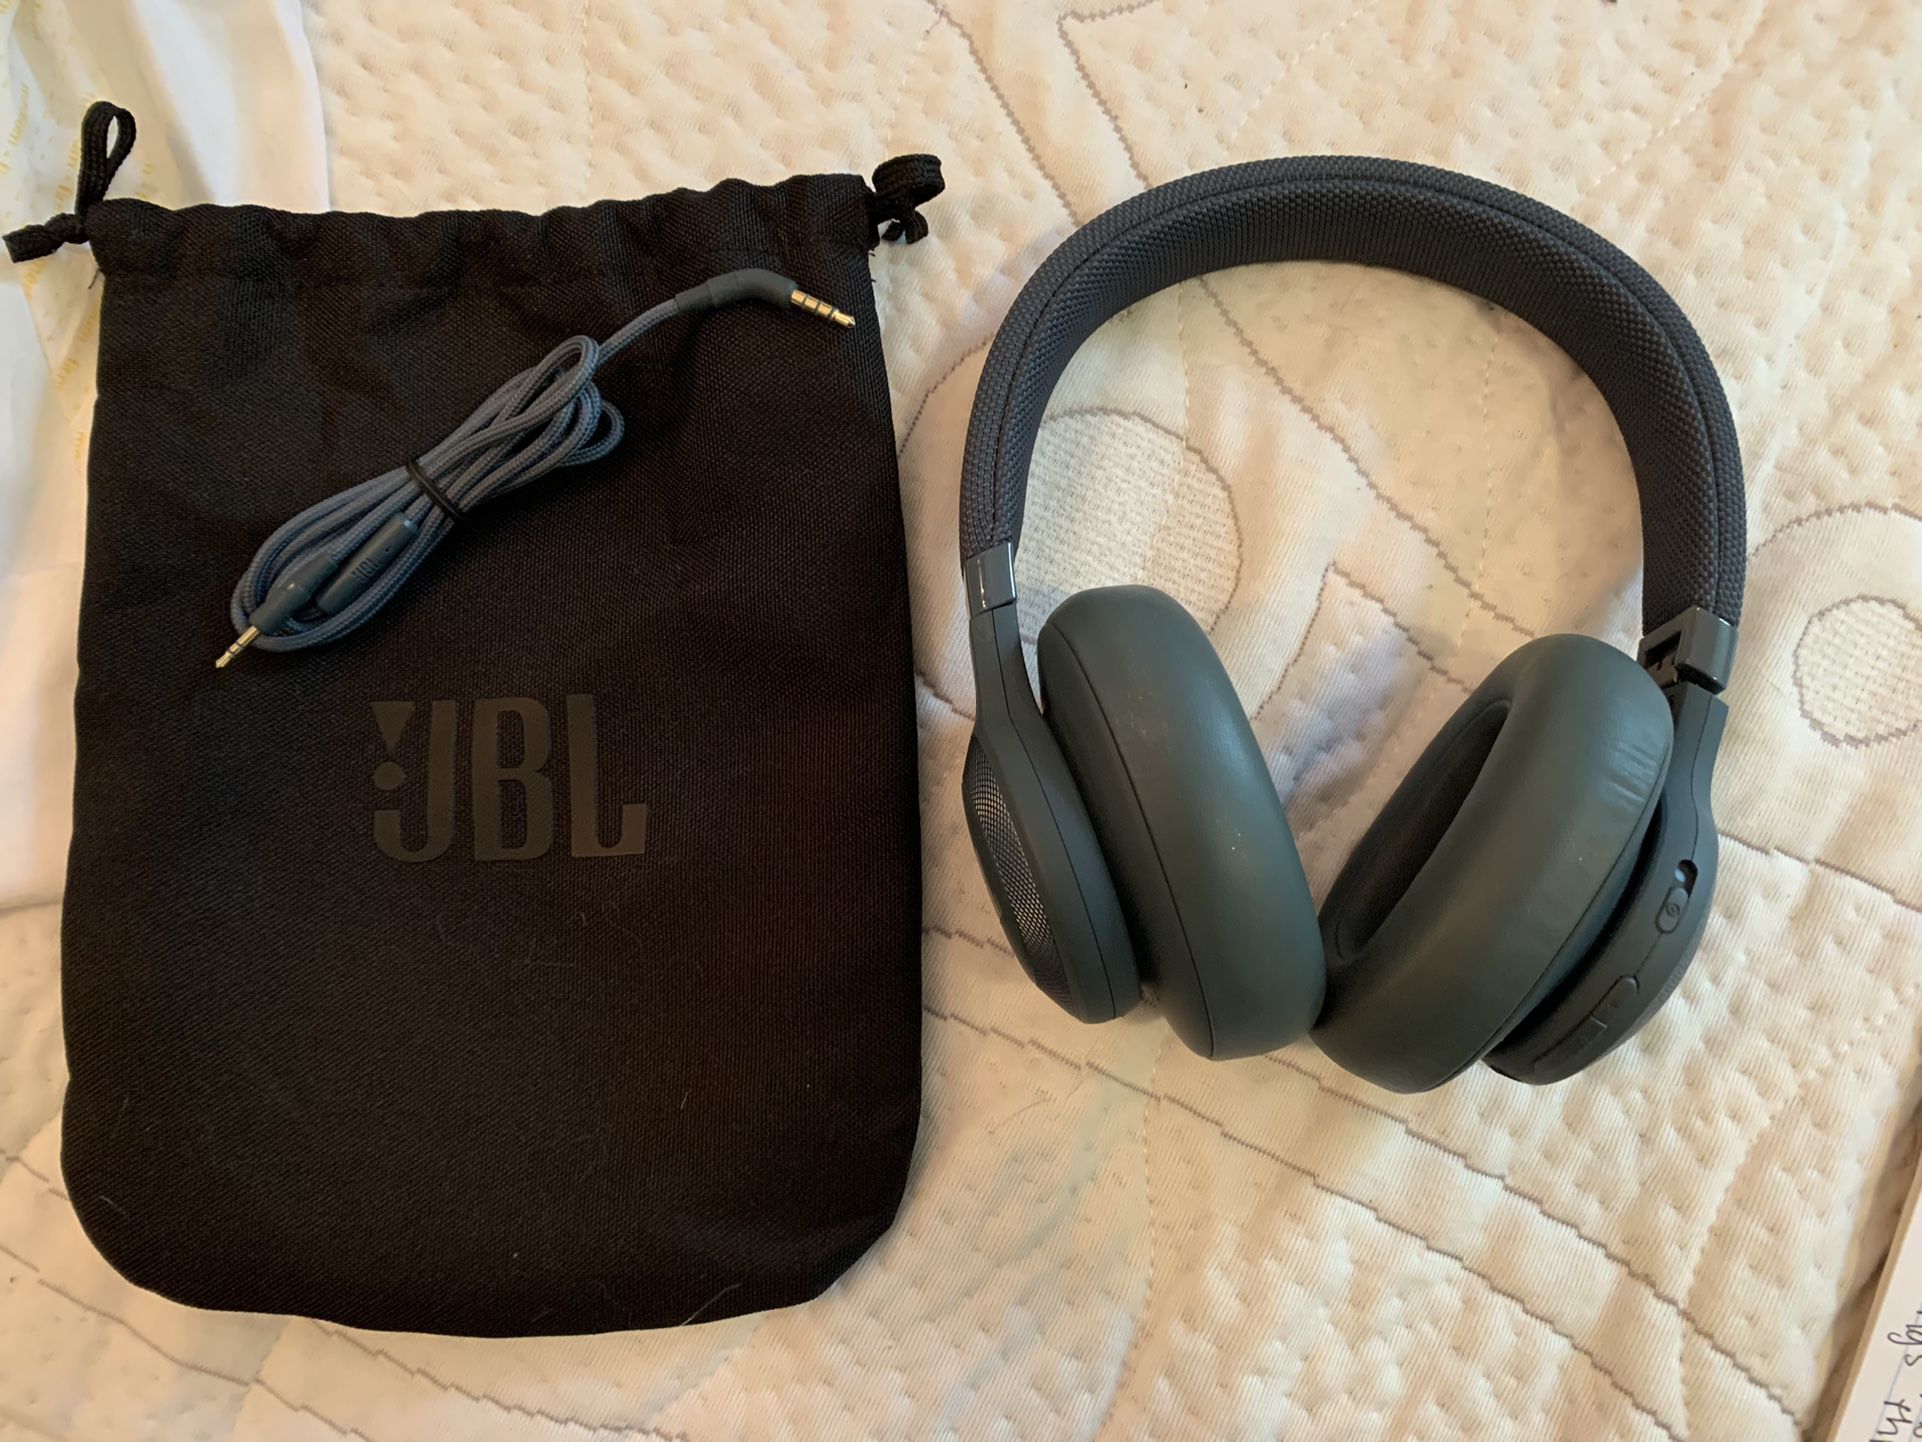 JBL Wireless Headphones - Like New!